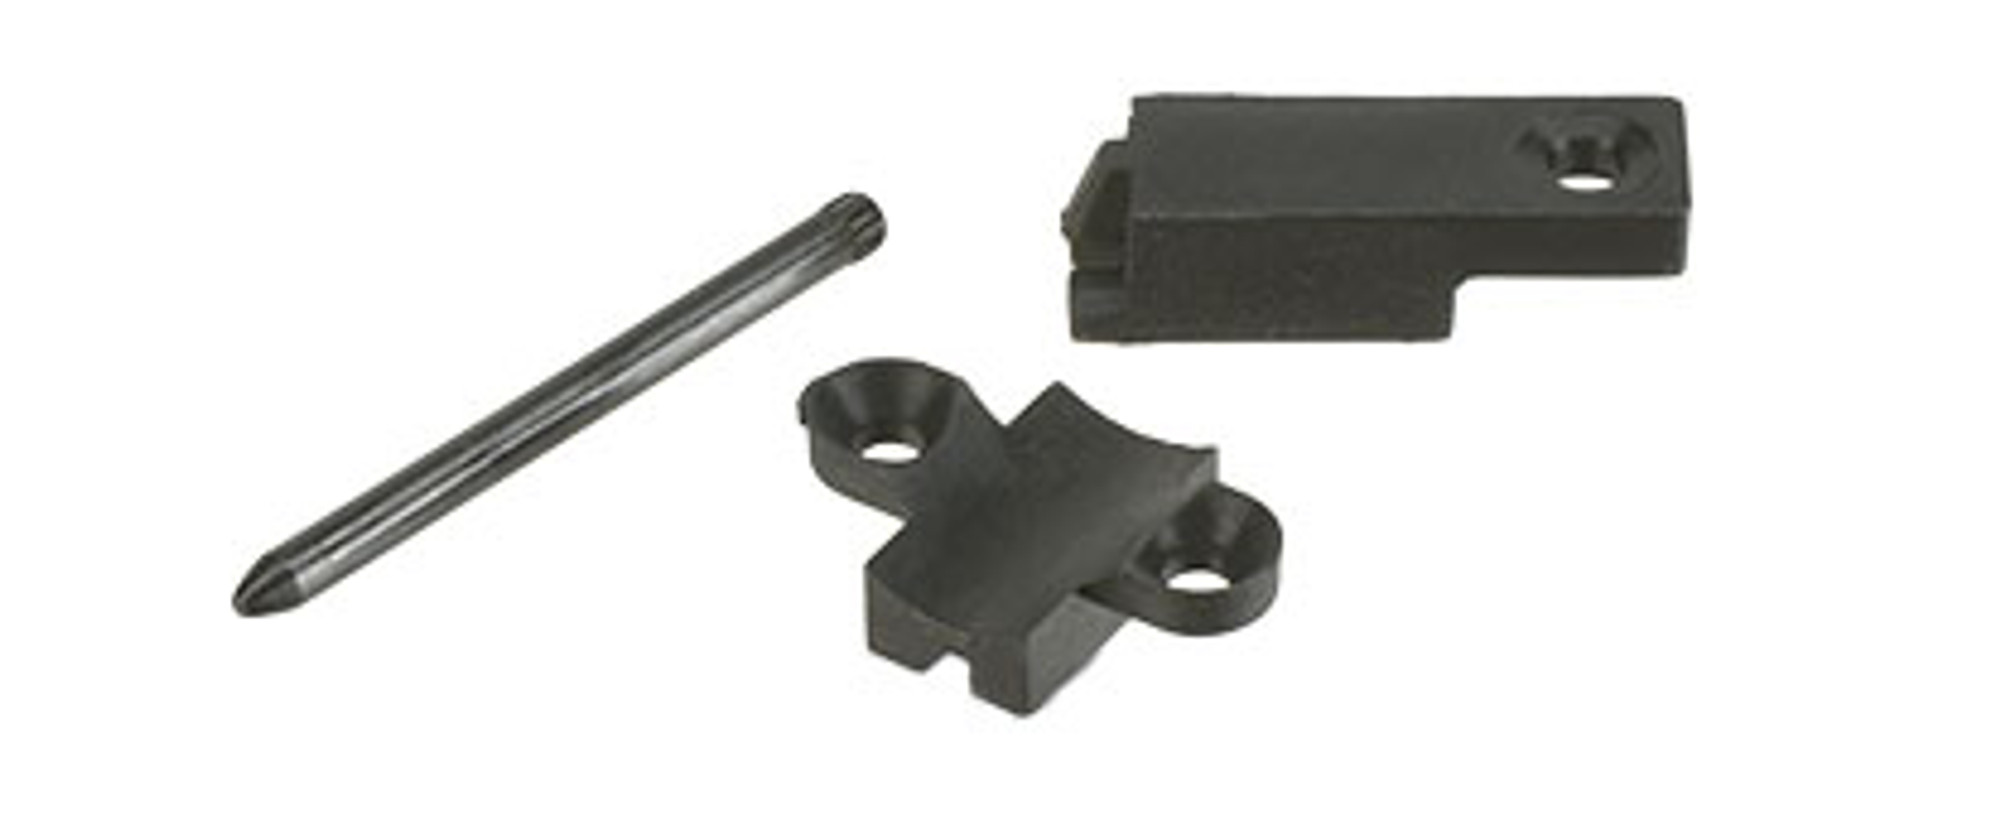 WE-Tech Replacement Nozzle Housing Parts for L85 Series Airsoft GBB Rifles - Part# 12 / 13 / 14